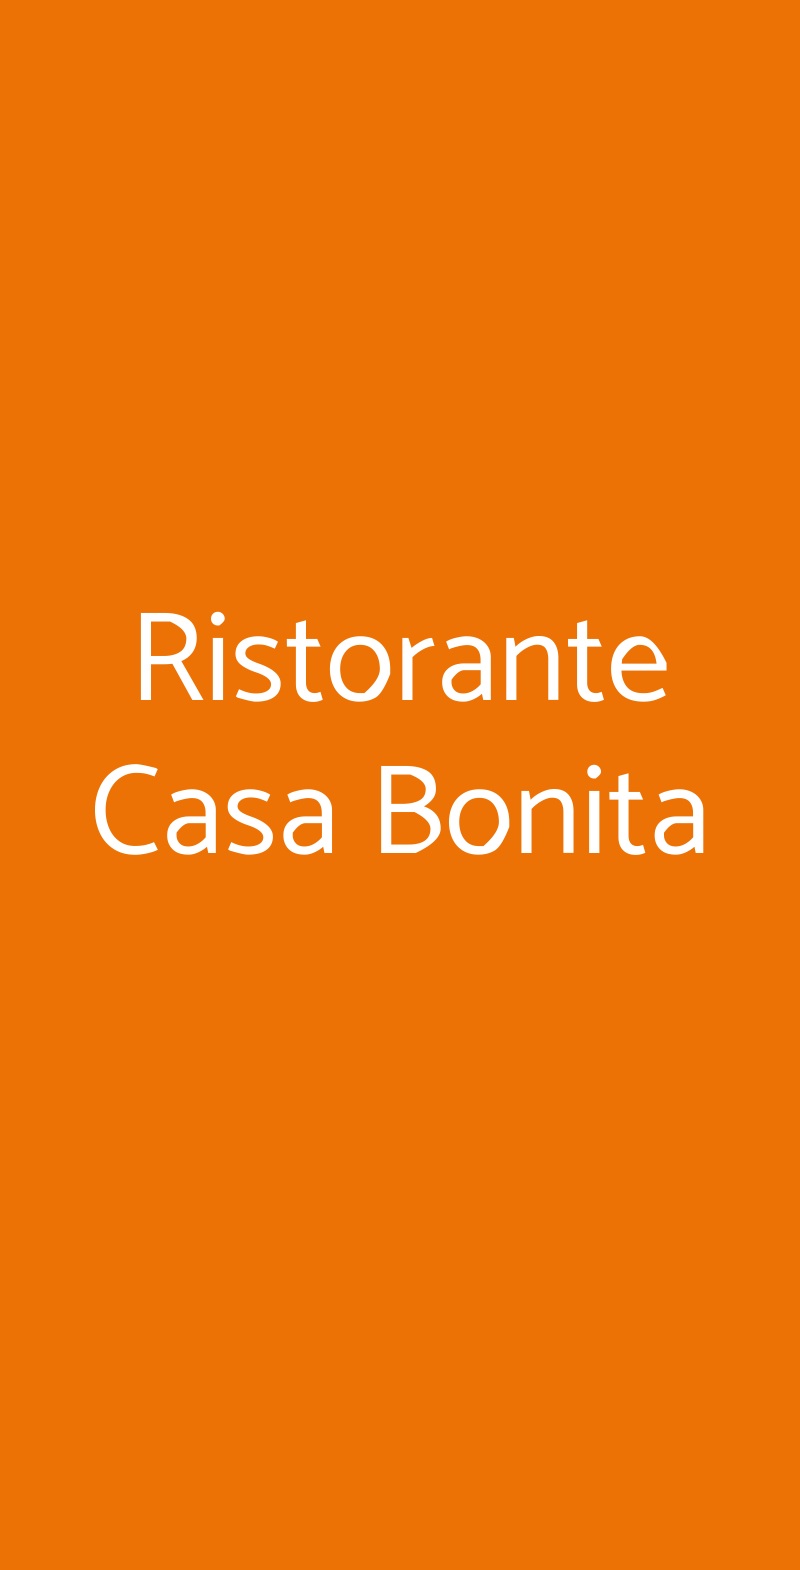 Ristorante Casa Bonita Venezia menù 1 pagina